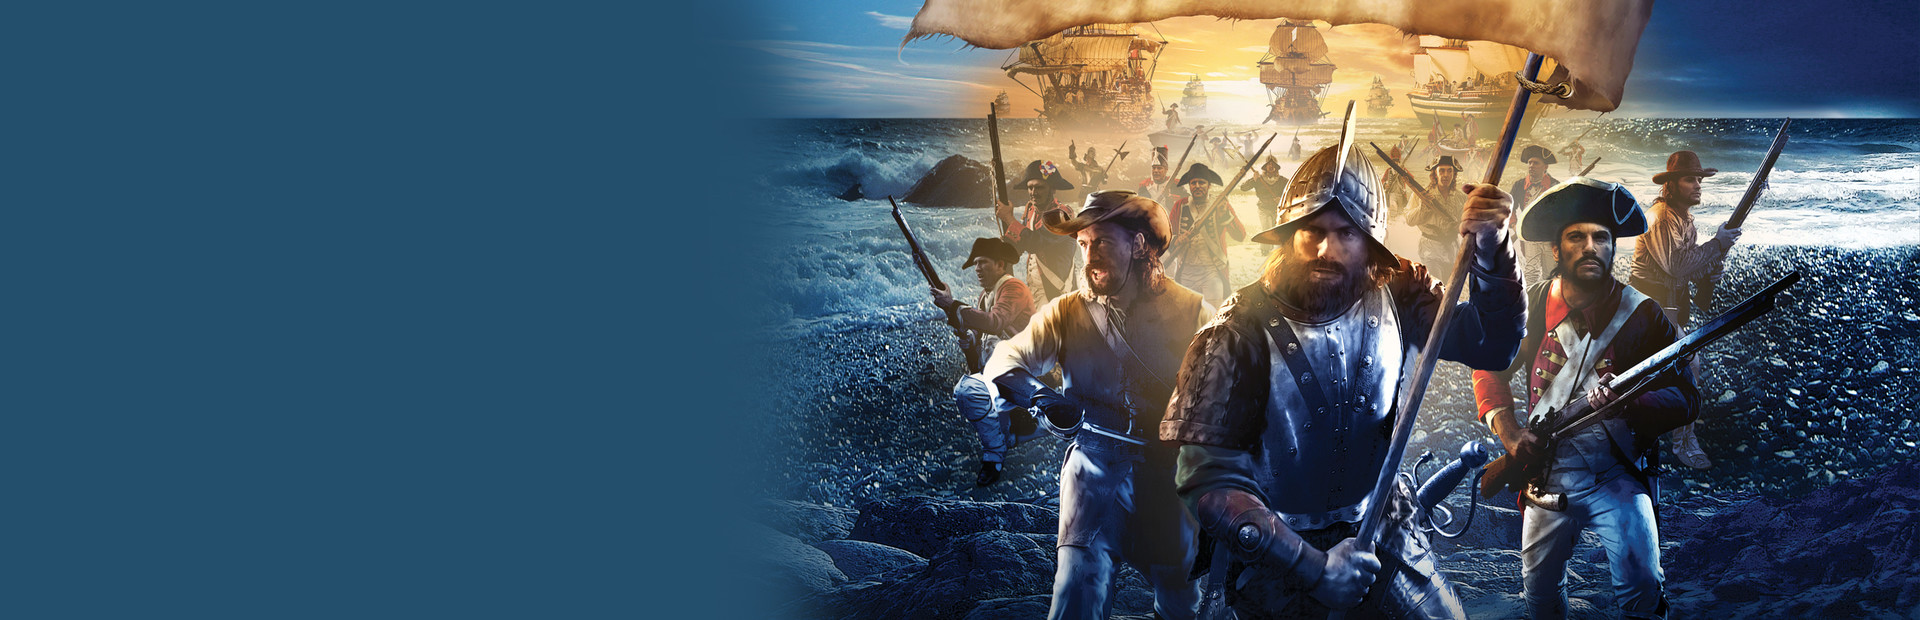 Sid Meier's Civilization IV: Colonization cover image